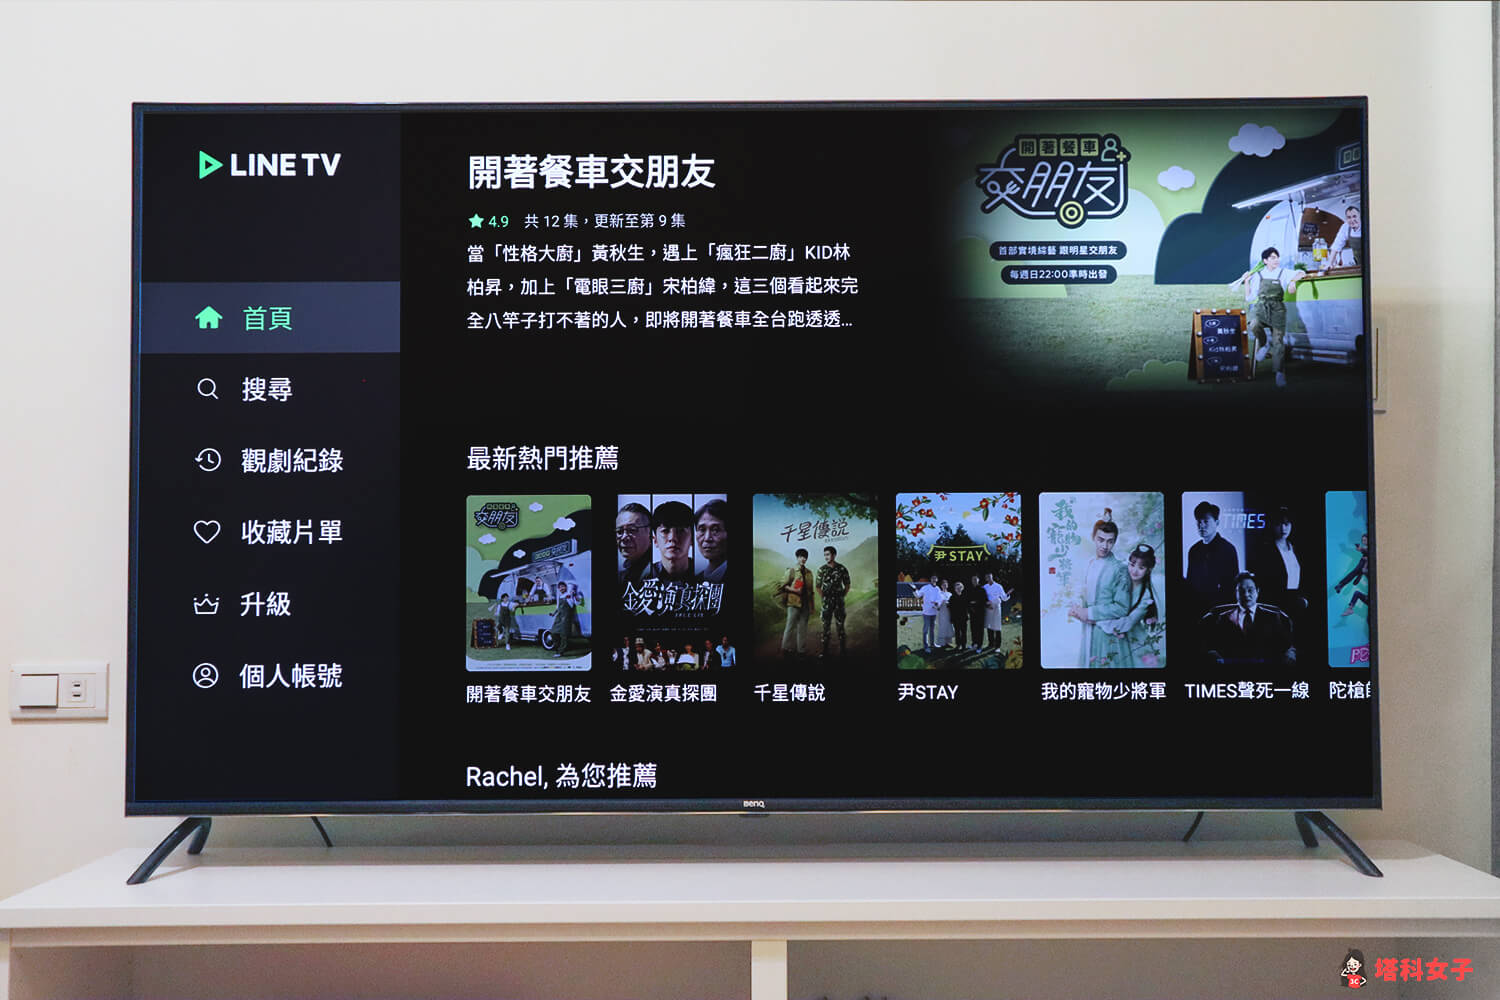 BENQ 4K HDR 液晶電視 E 系列：LINE TV